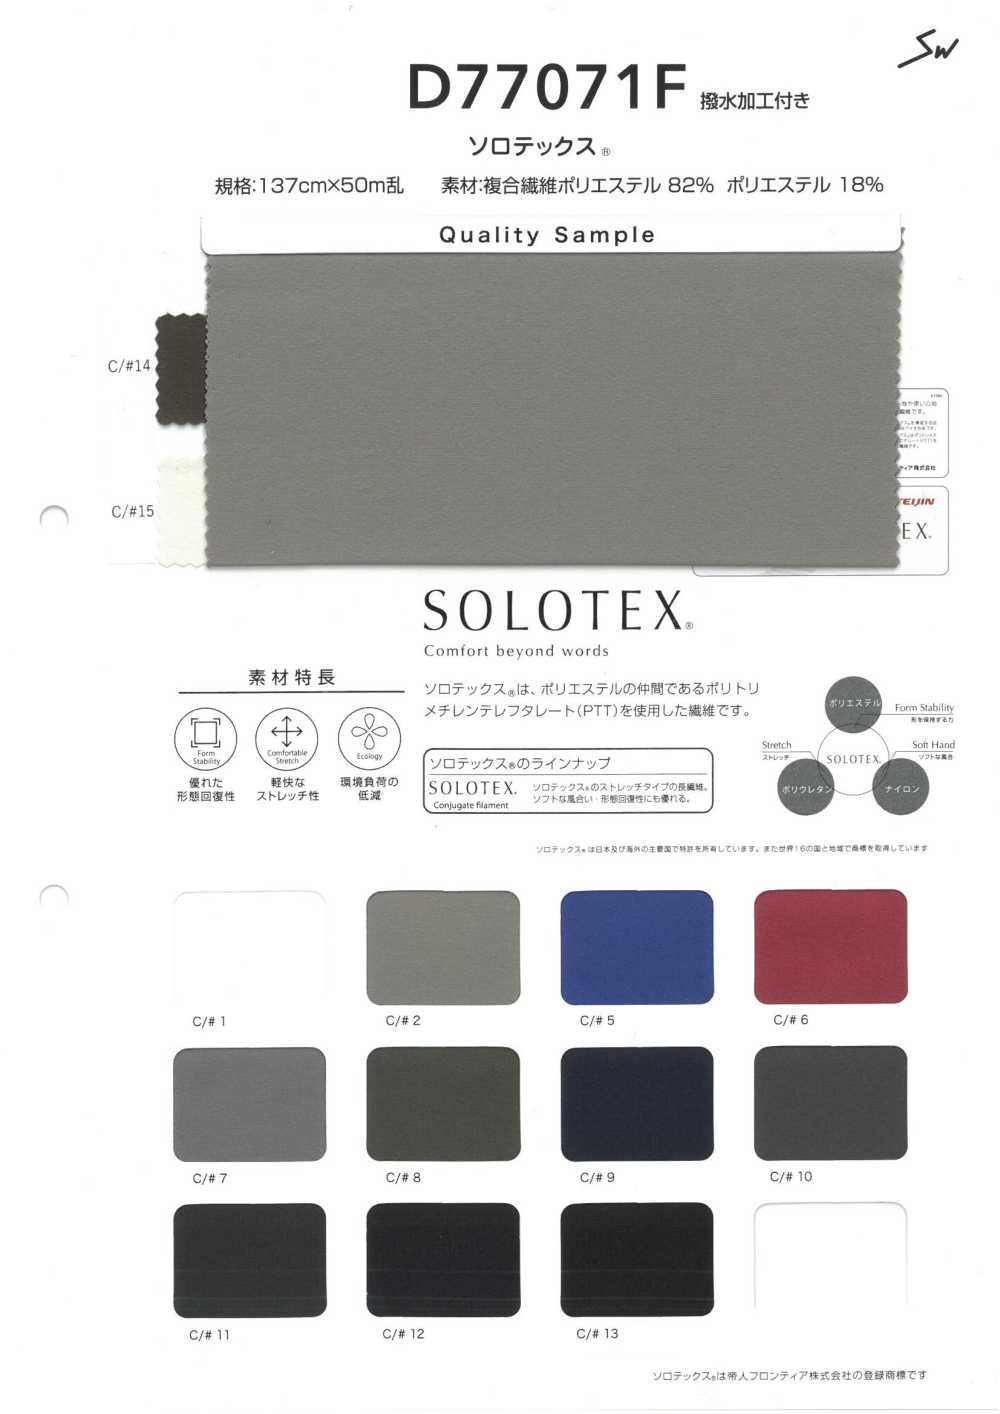 D77071F Solotex[Textilgewebe] Sanwa Fasern